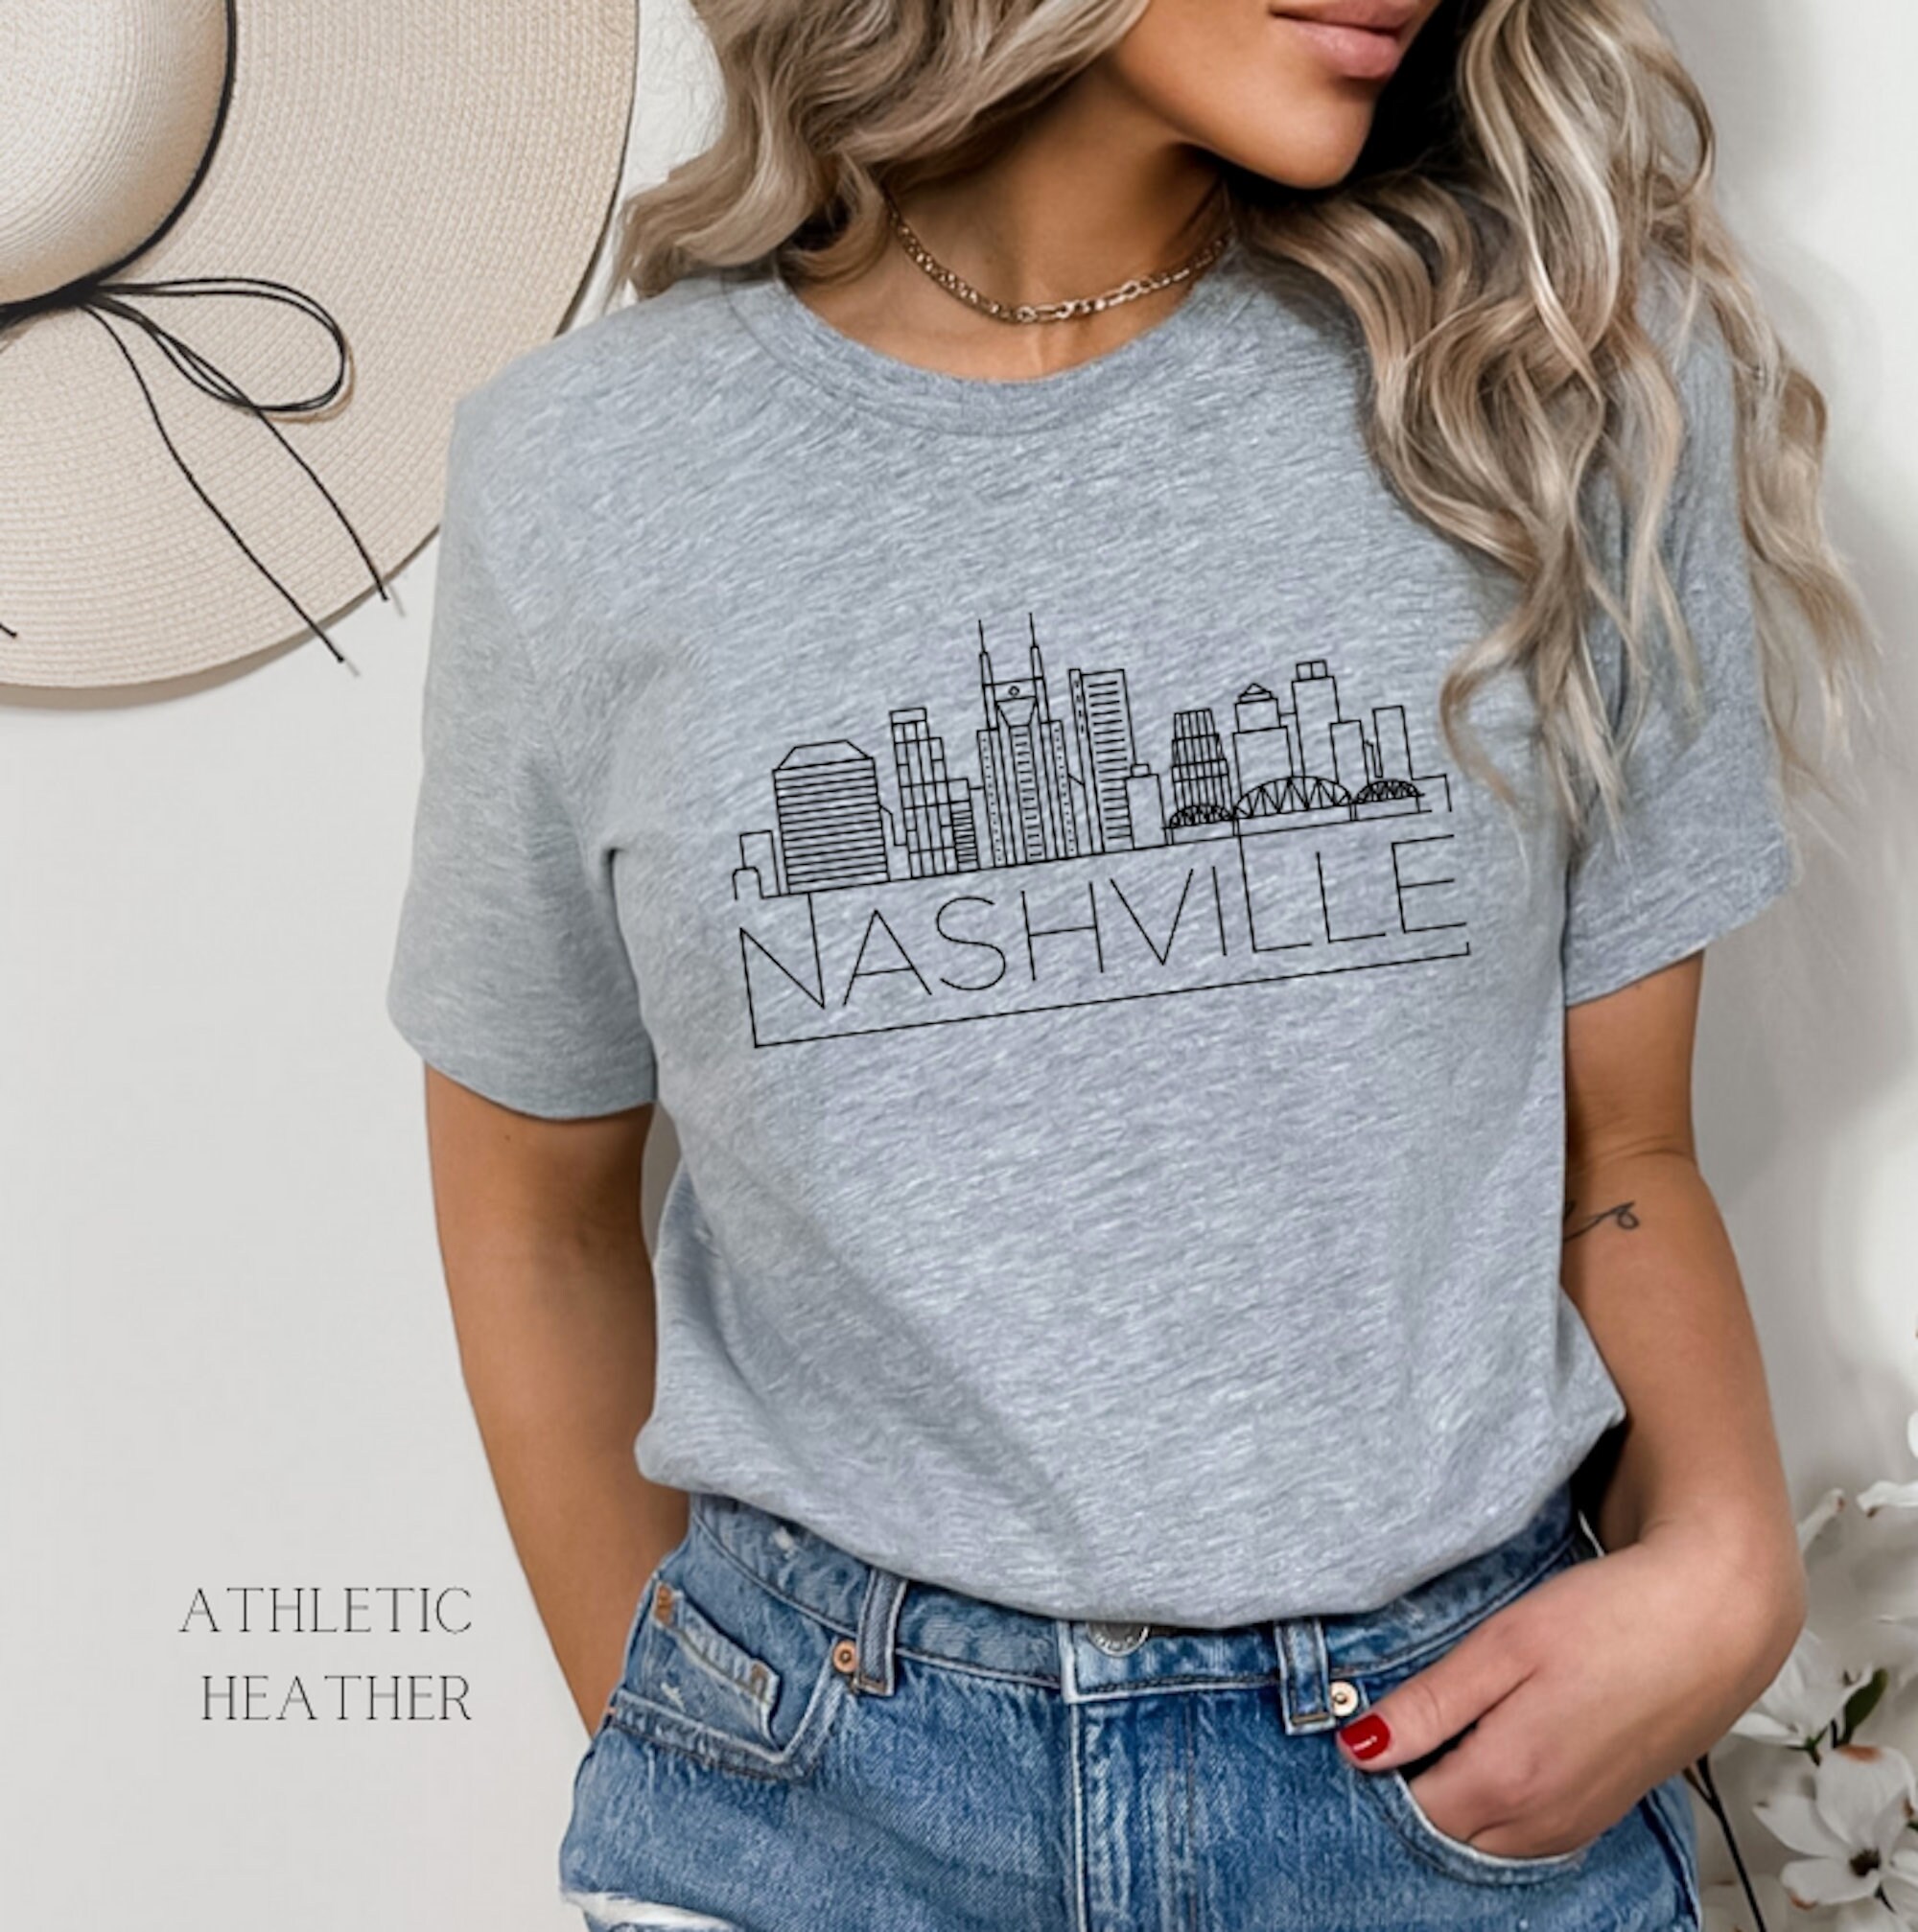 Discover Nashville Tennessee Shirt - Unisex Crewneck Skyline Nashville, Tennessee T-Shirt